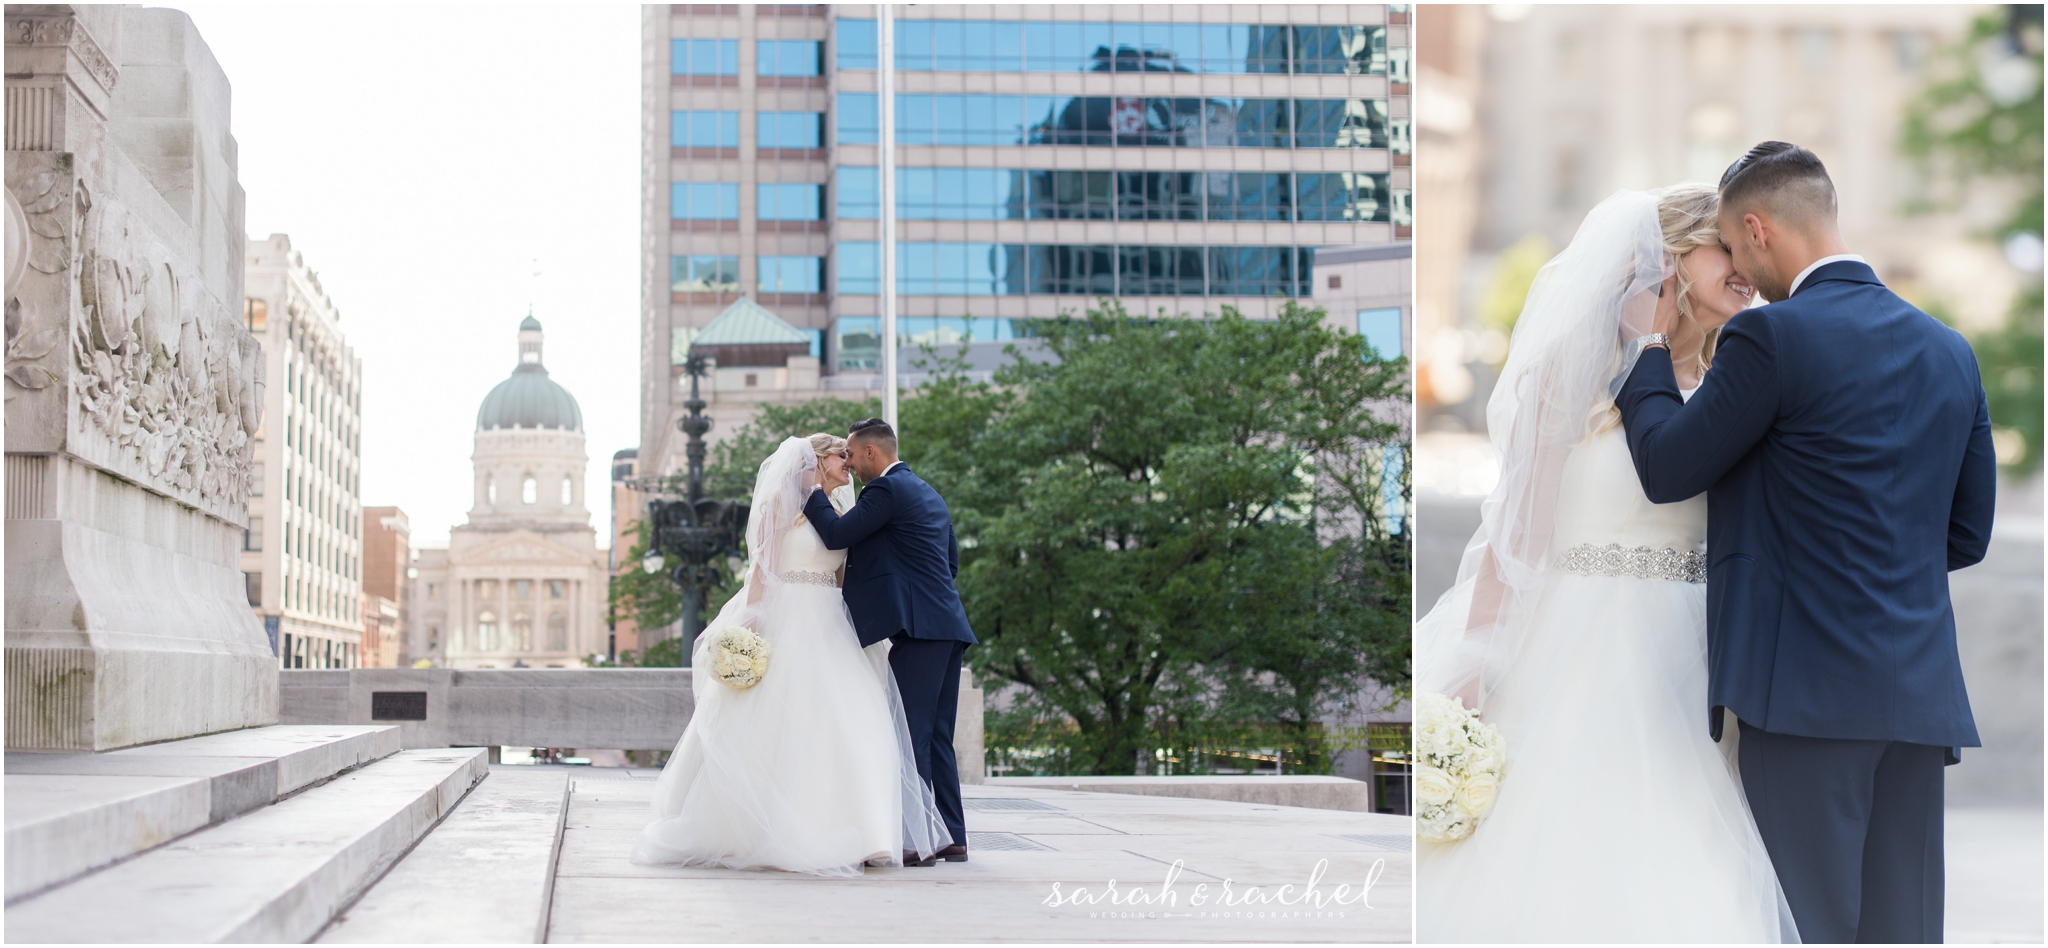 Chris & Jillian | Indianapolis wedding | Omni Severin Hotel | Monument Circle photos